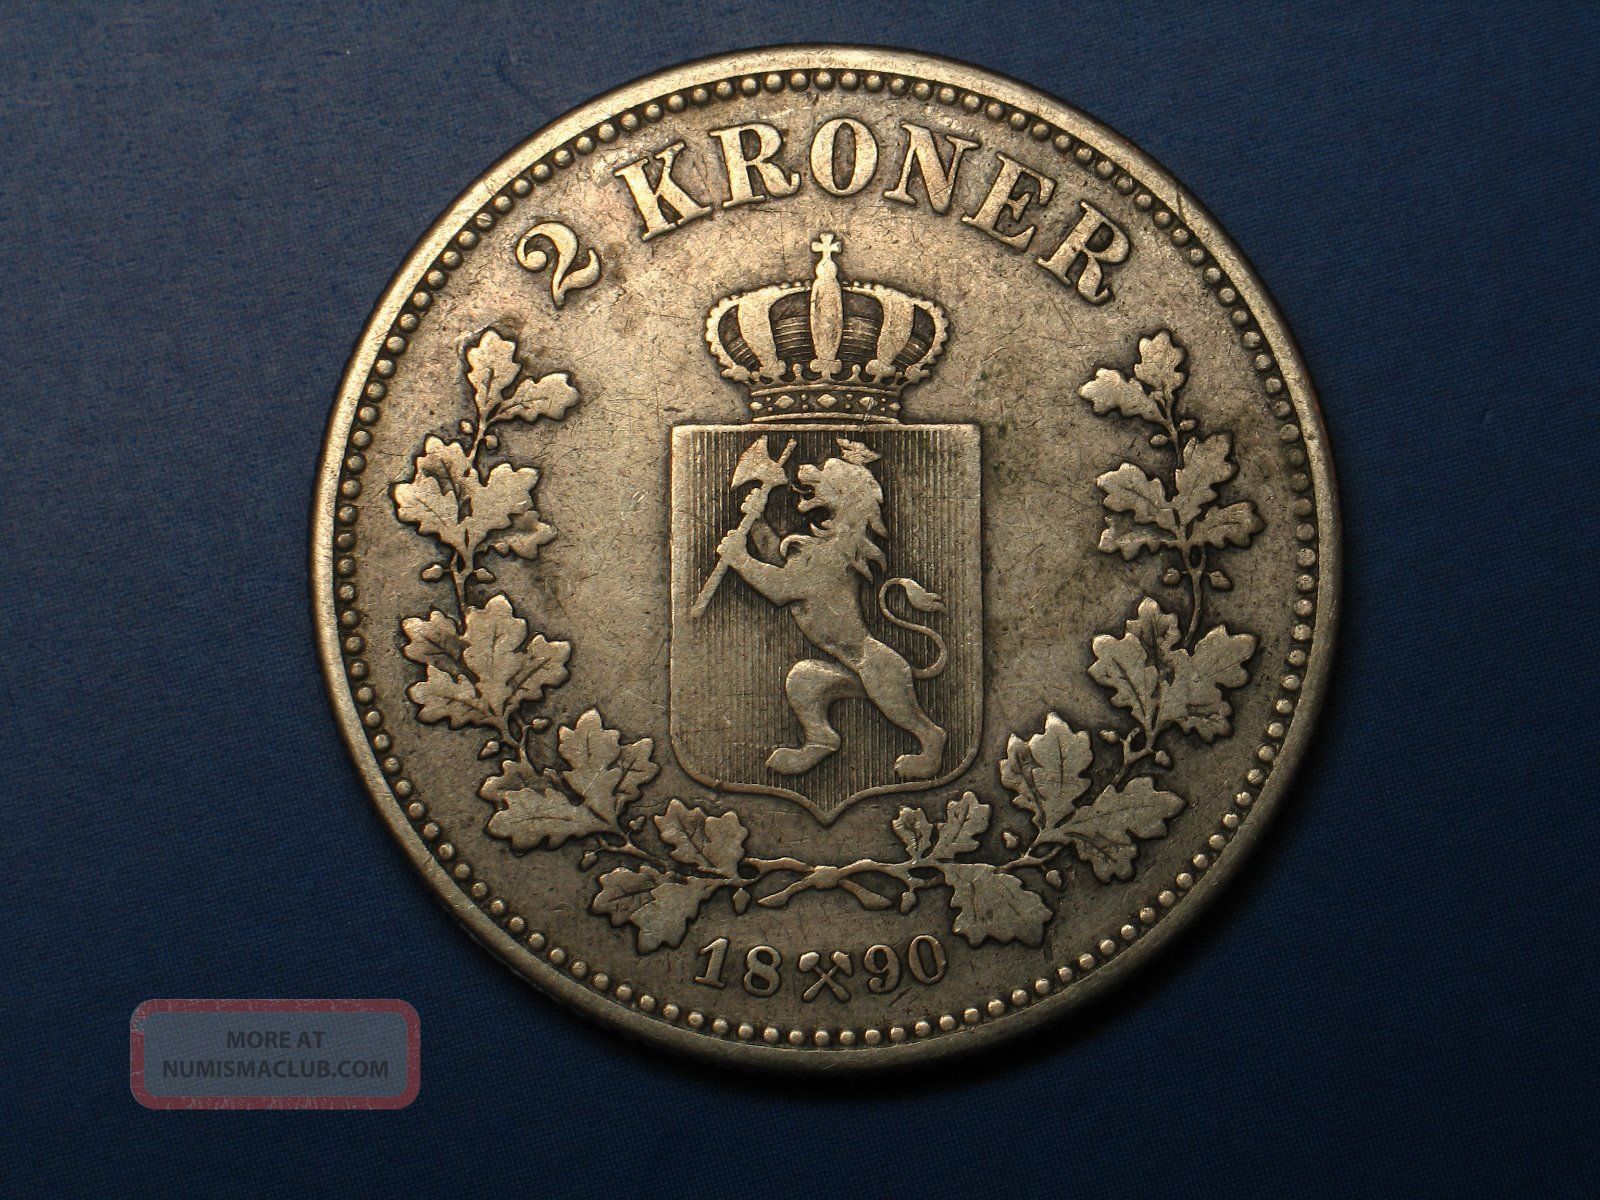 Norway 1890, 2 Kroner Silver, Circulated